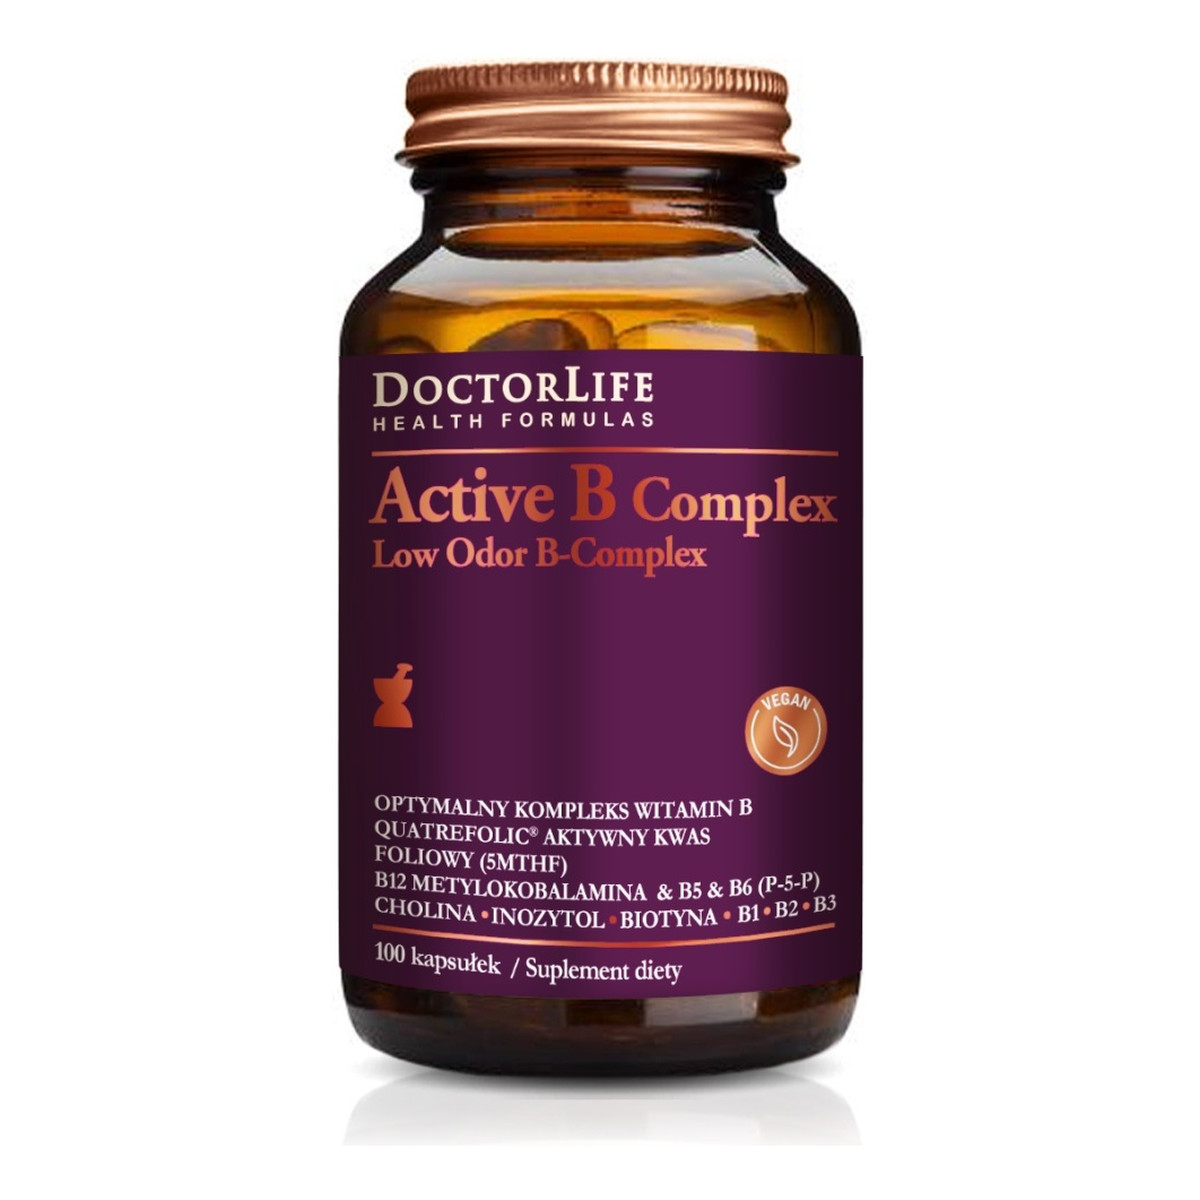 Doctor Life Active B Complex Low Odor B-Complex optymalny kompleks witamin B suplement diety 100 kapsułek